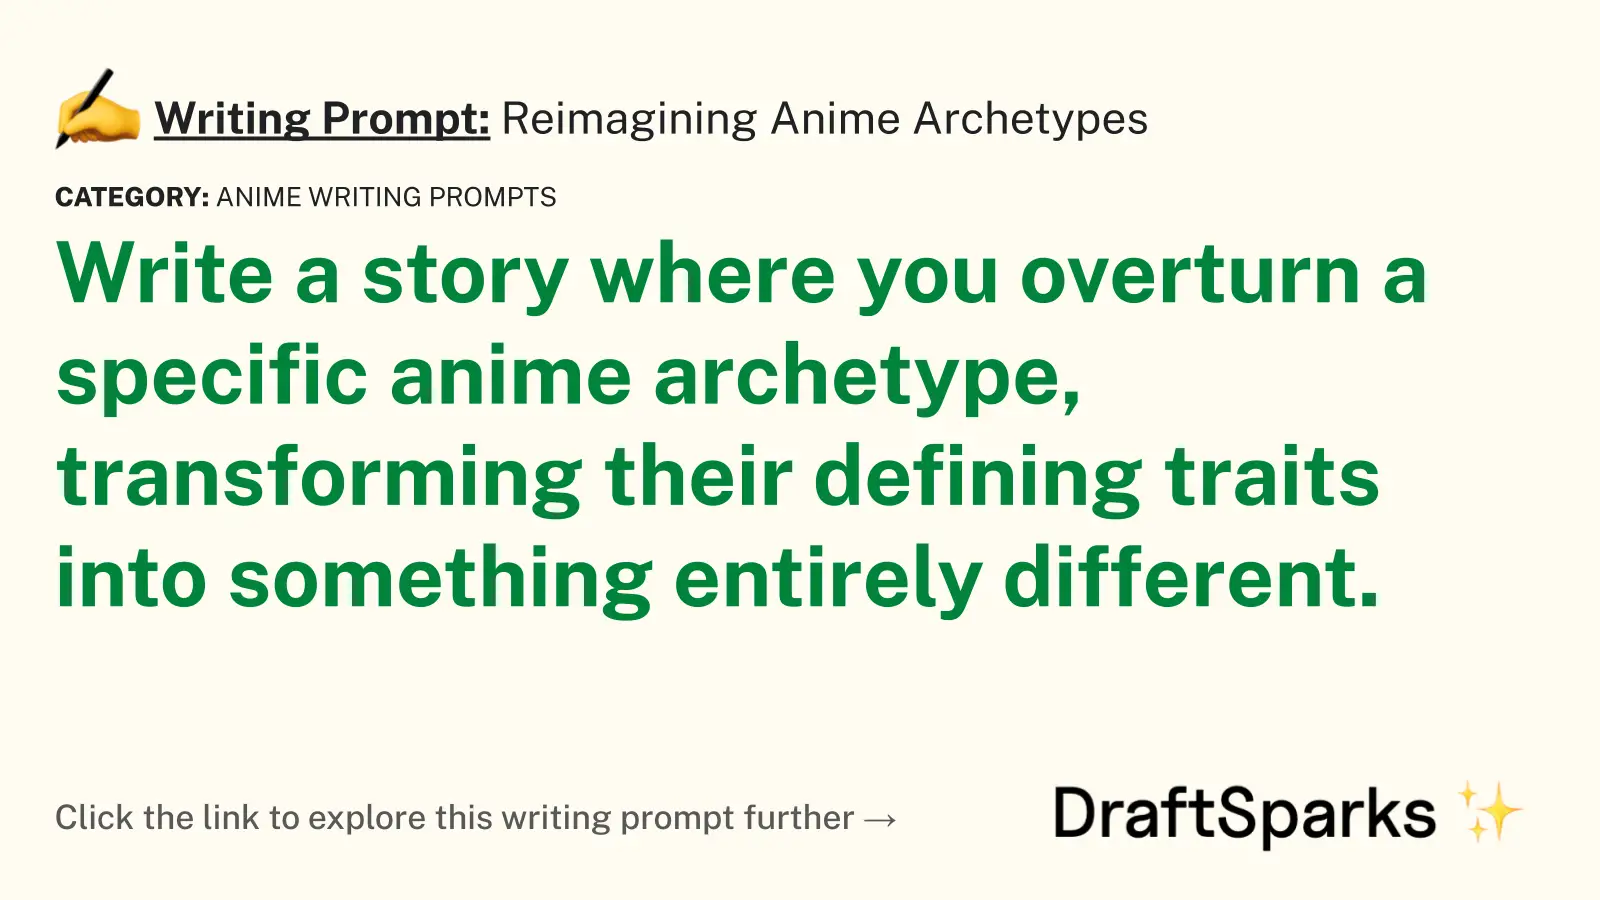 Reimagining Anime Archetypes